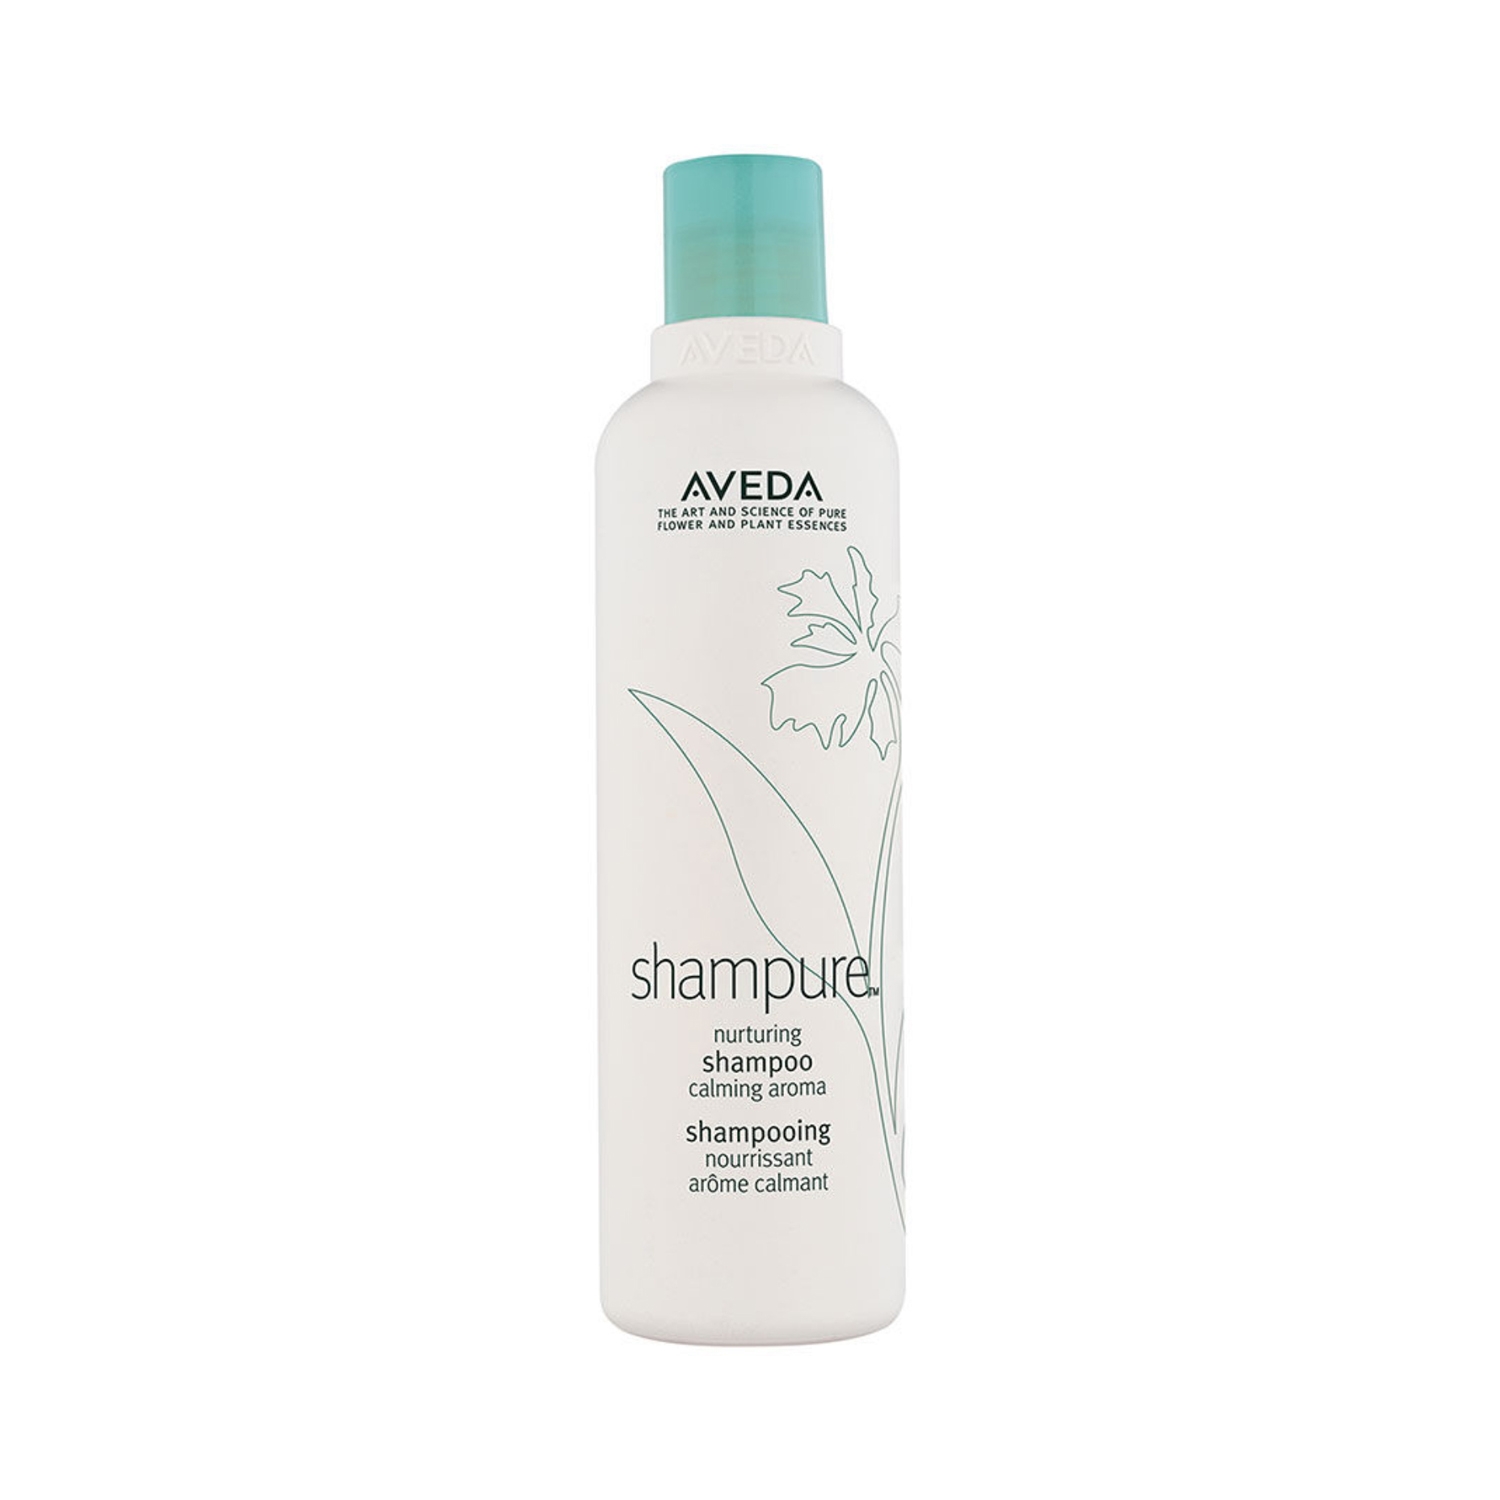 Aveda | Aveda Shampure Nurturing Shampoo (250ml)